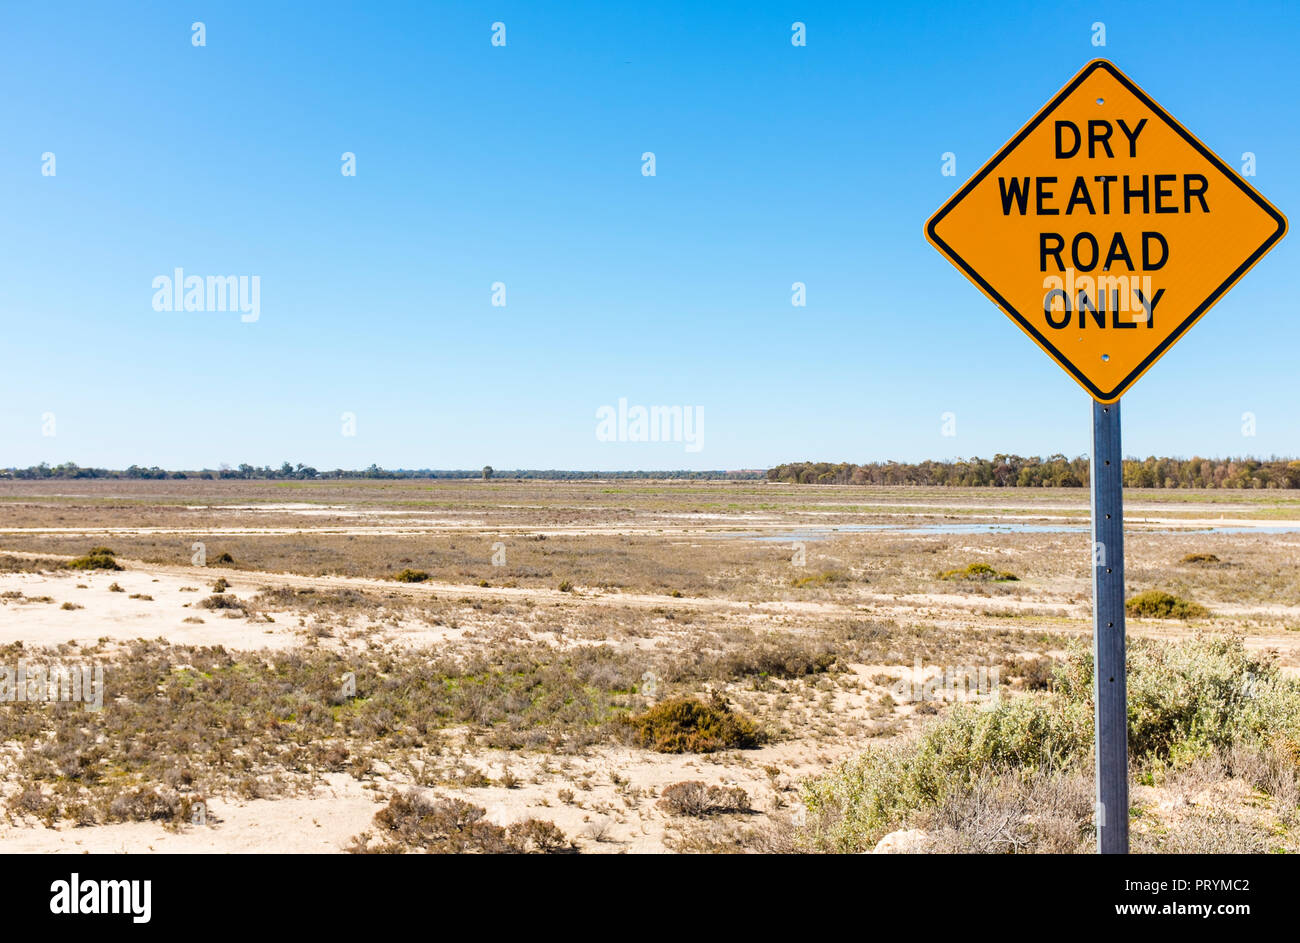 Schild trockenes Wetter Straße nur, Australien Stockfoto